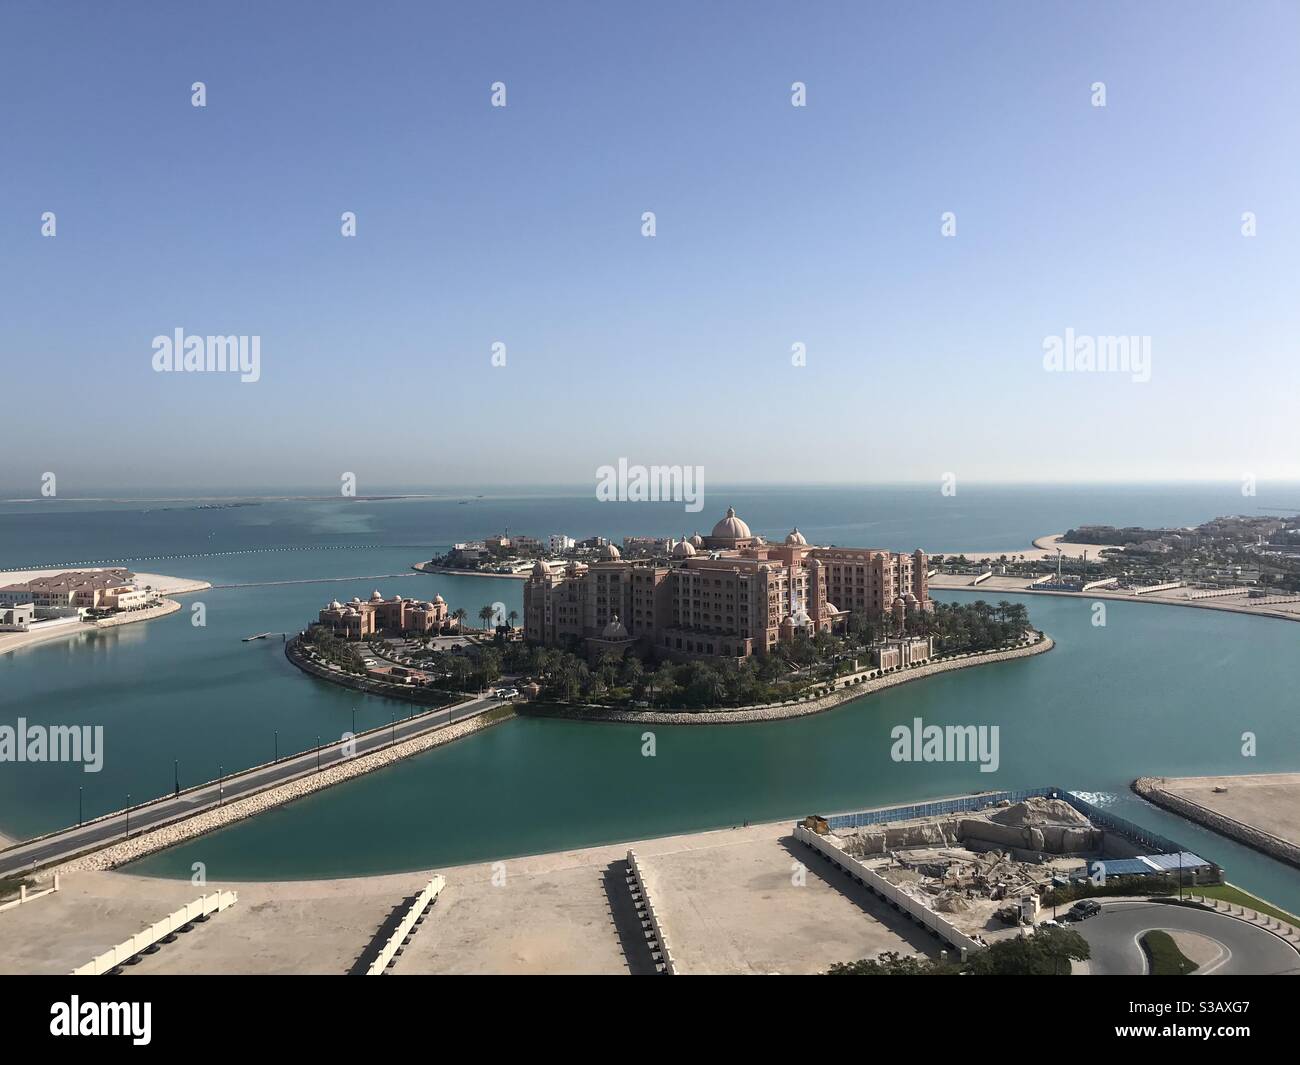 View of the Kempinski Marsa Malaz Hotel on the island of The Pearl, Doha, Qatar Stock Photo